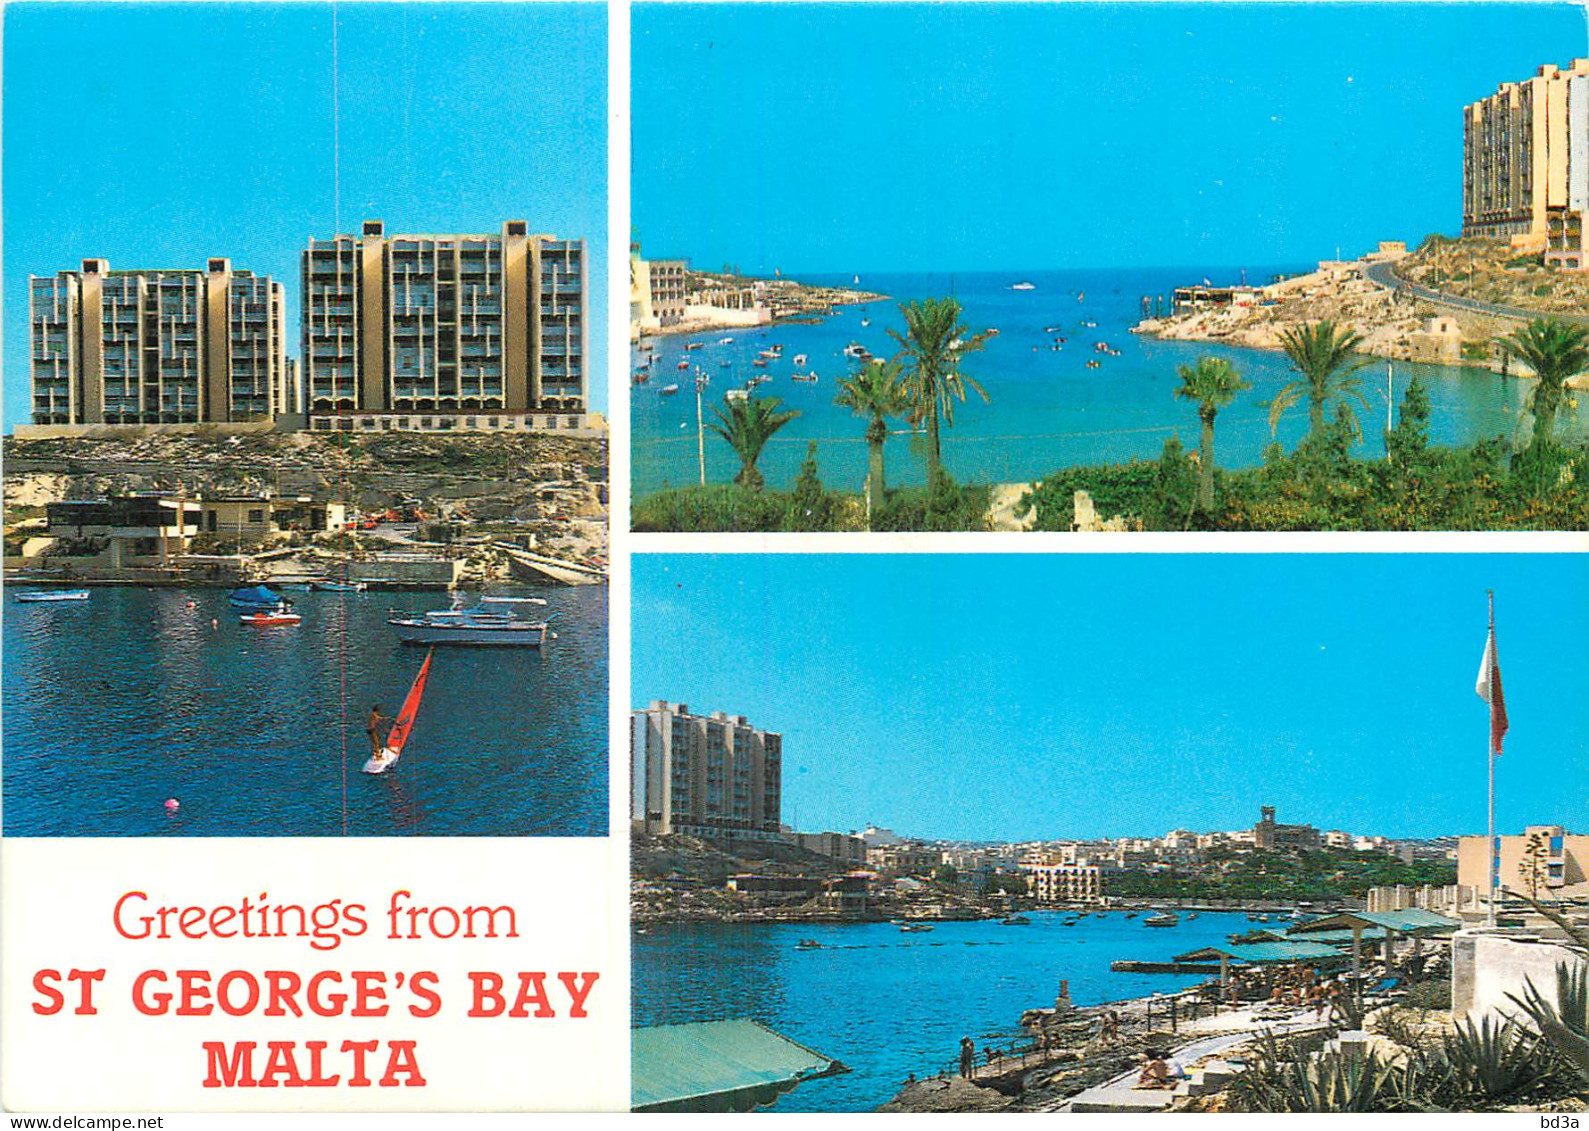  MALTE  MALTA  SAINT GEORGES BAY - Malta